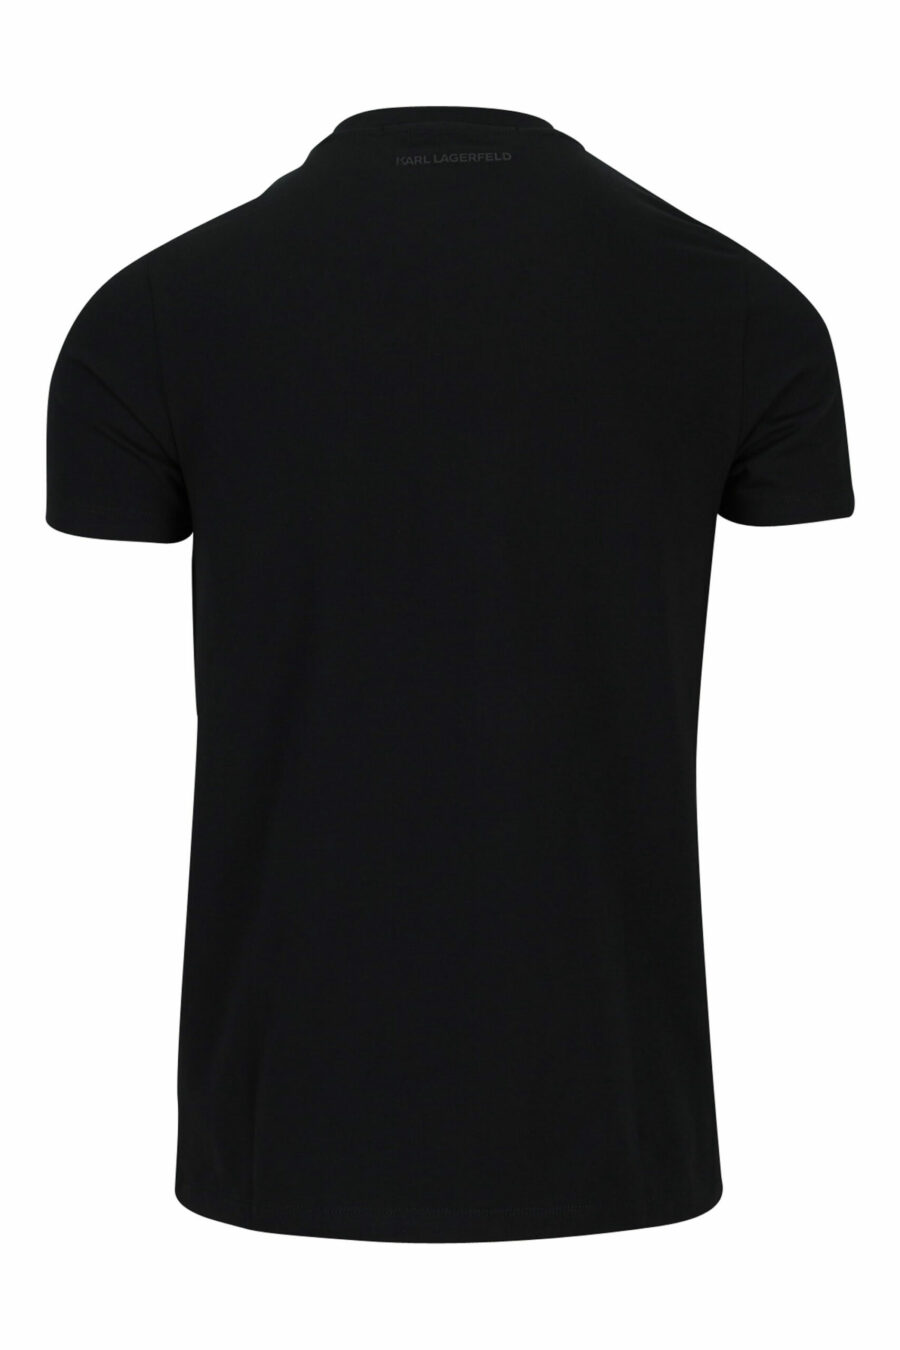 T-shirt noir avec maxilogo "karl" doré - 4062226681872 1 scaled